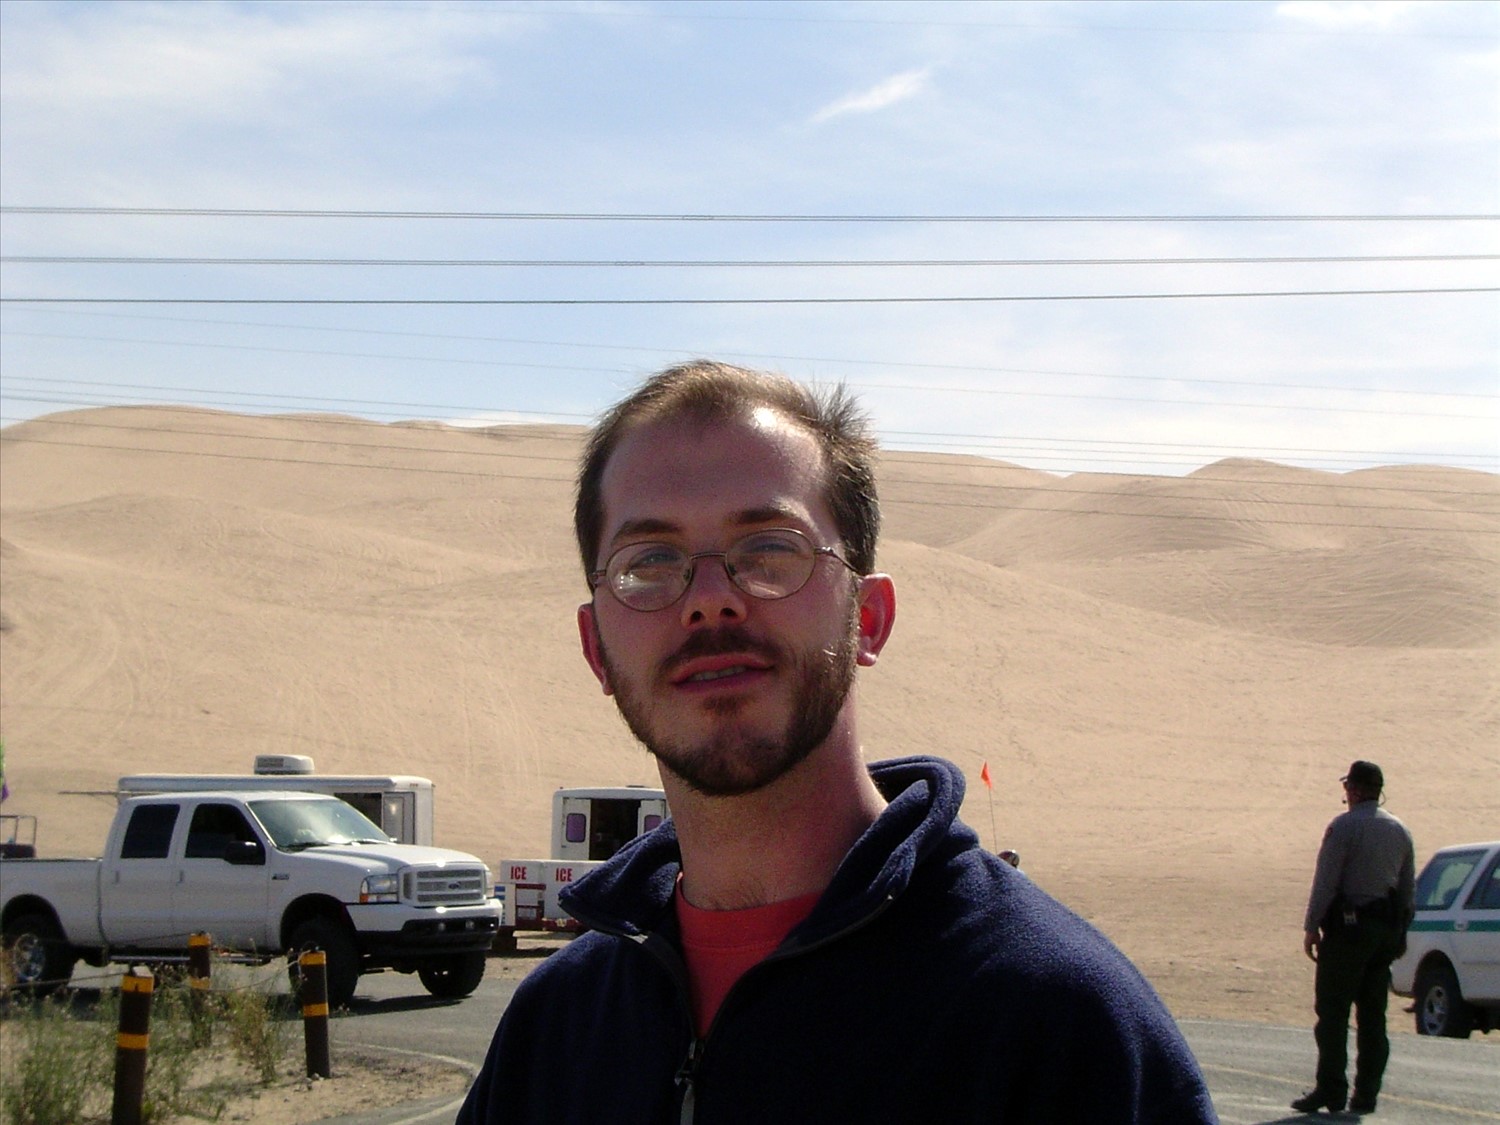 Erik at the Dunes. DSC00475.jpg. Uploaded by Erik Hoffmann on 2/24/2004. 